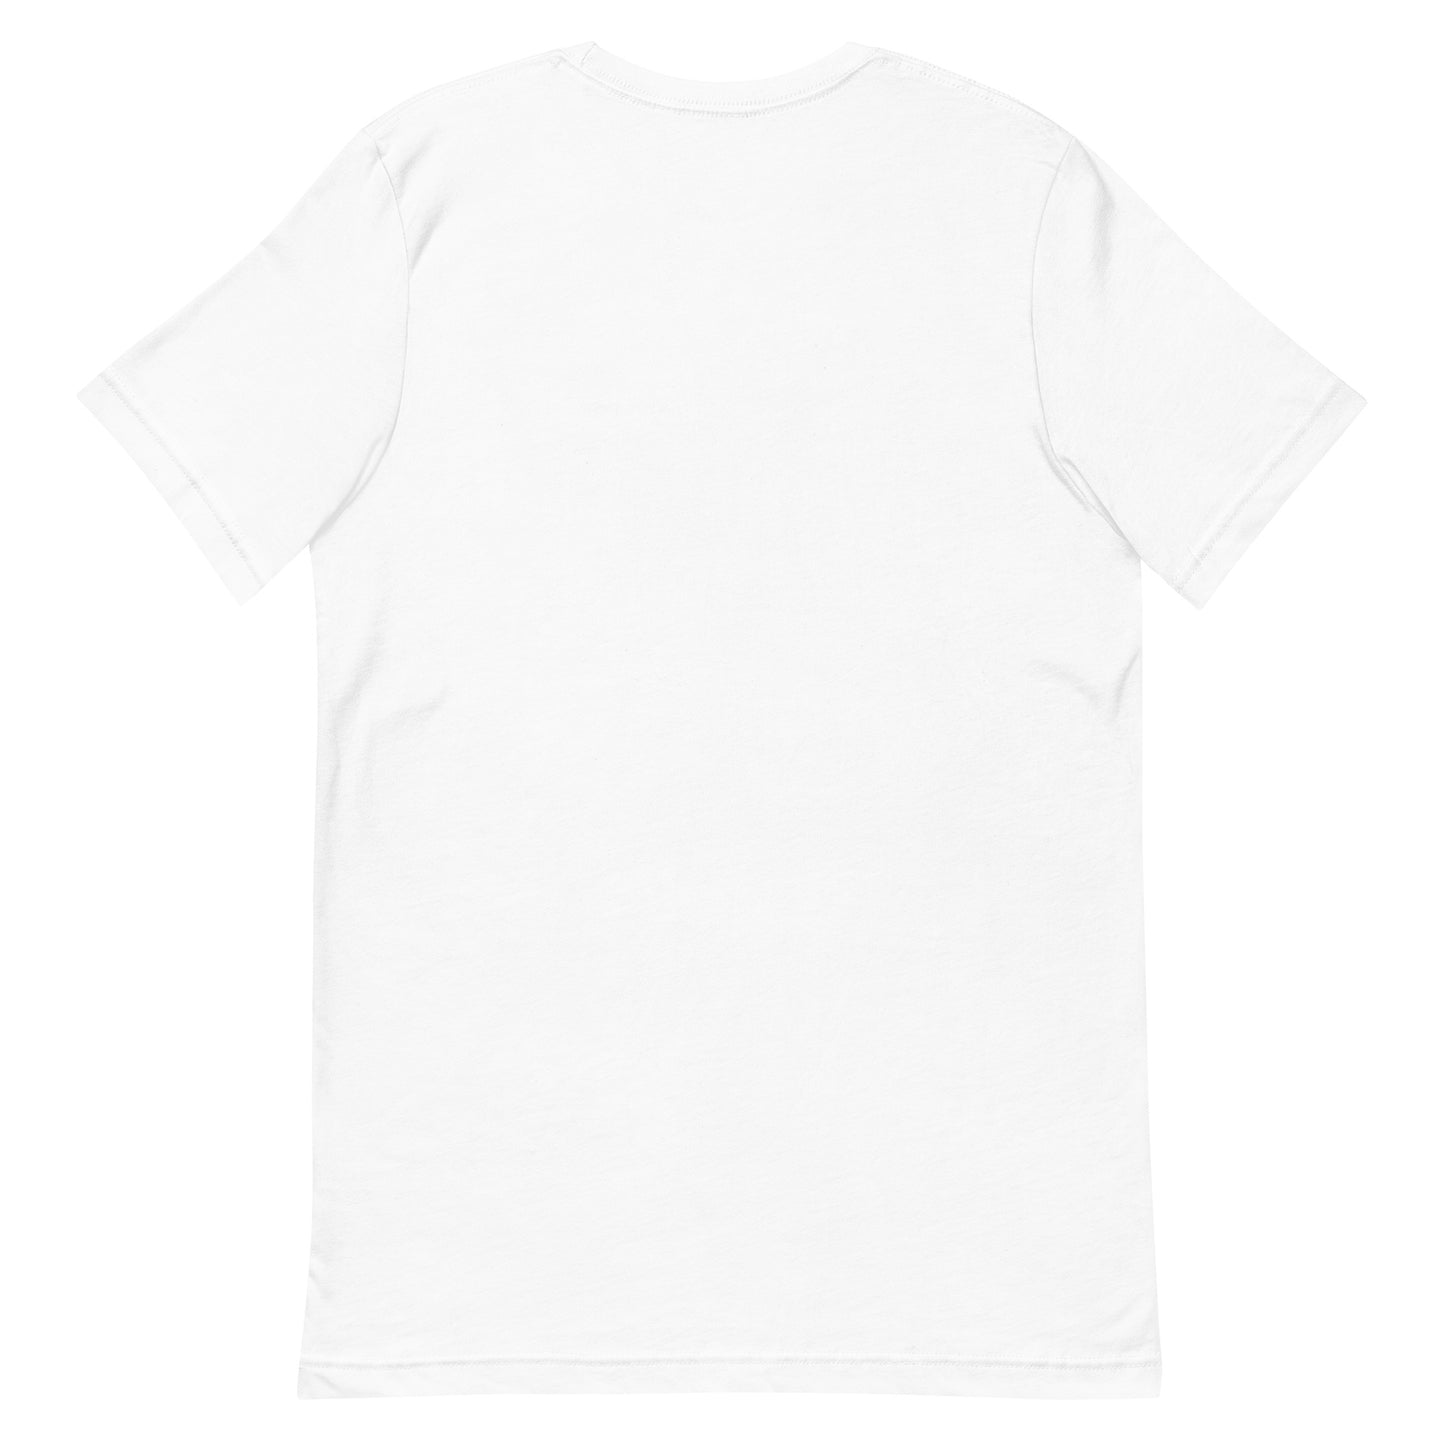 Unisex t-shirt "46 HON CHAUSU" White